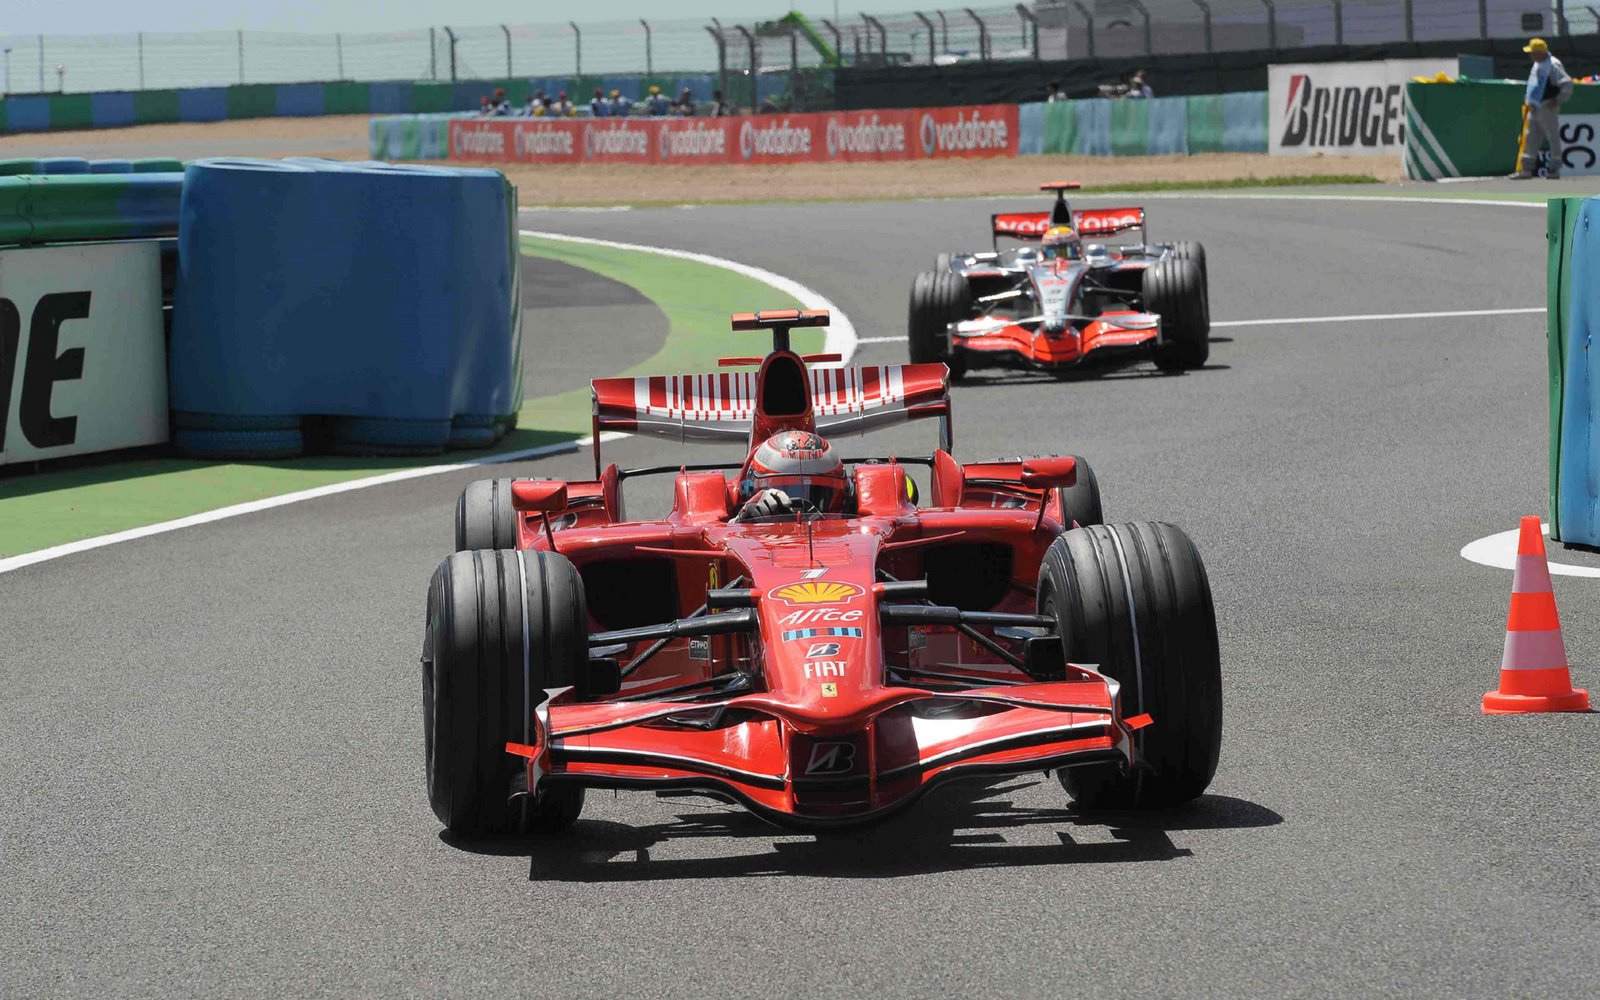 [Kimi+Räikkönen+Ferrari+Saturday+Qualifying+session+France+Magny+Cours,+F1+2008++23.jpg]